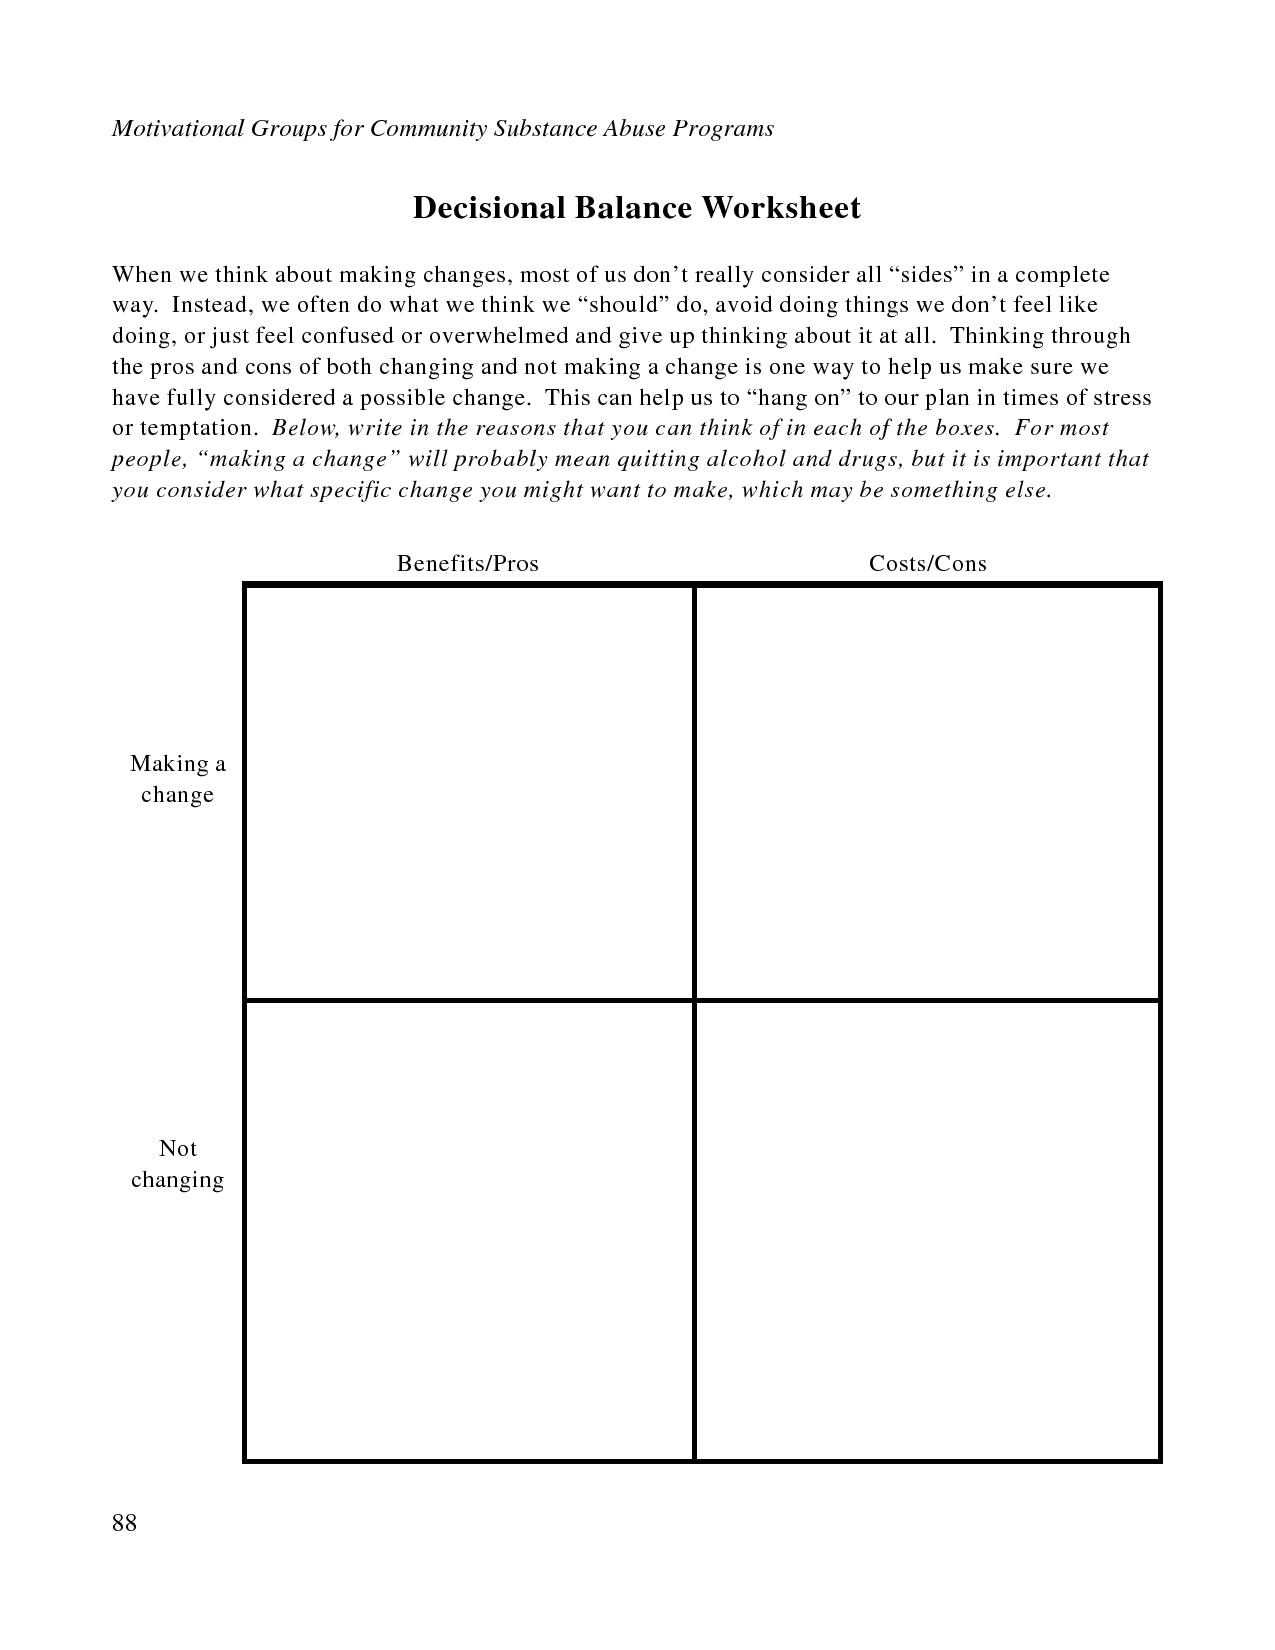 Free Printable Dbt Worksheets | Decisional Balance Worksheet - Pdf | Free Printable Therapy Worksheets